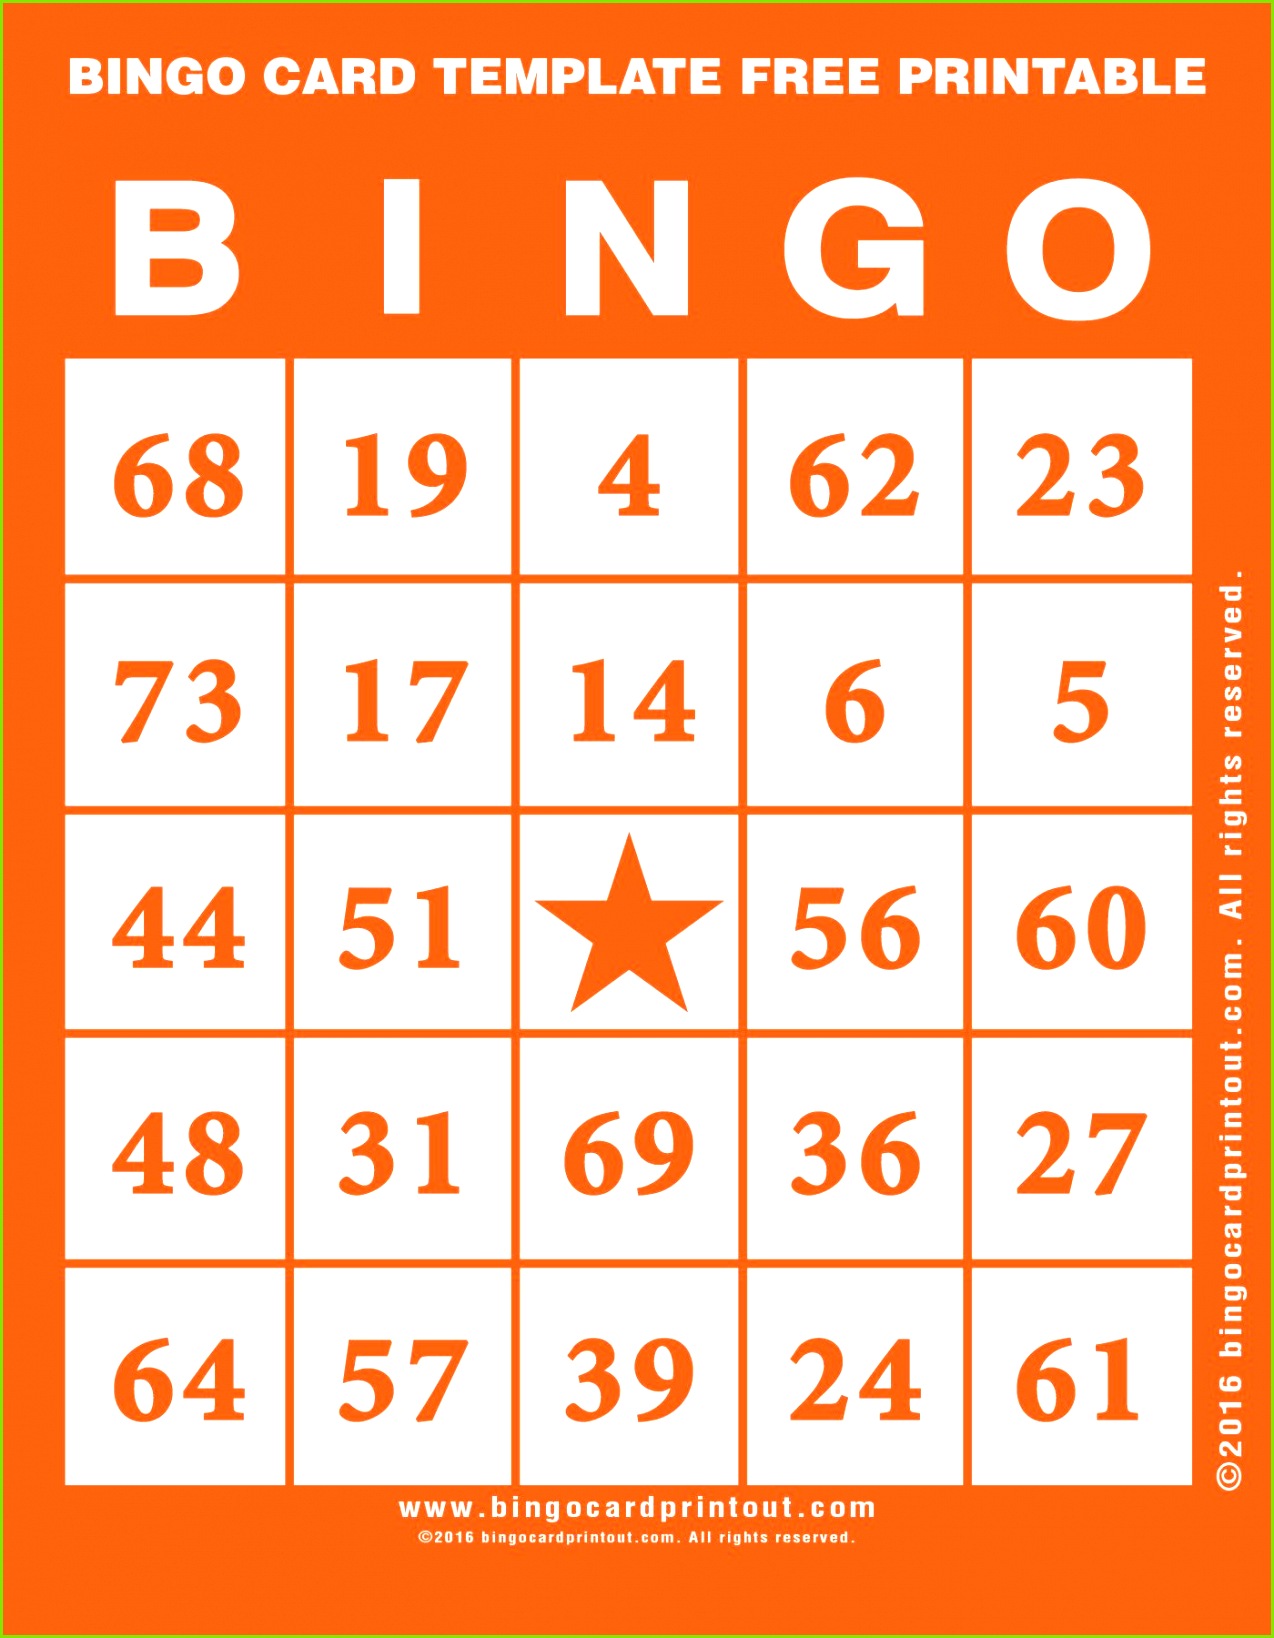 Bingo Card Template Free Printable 2